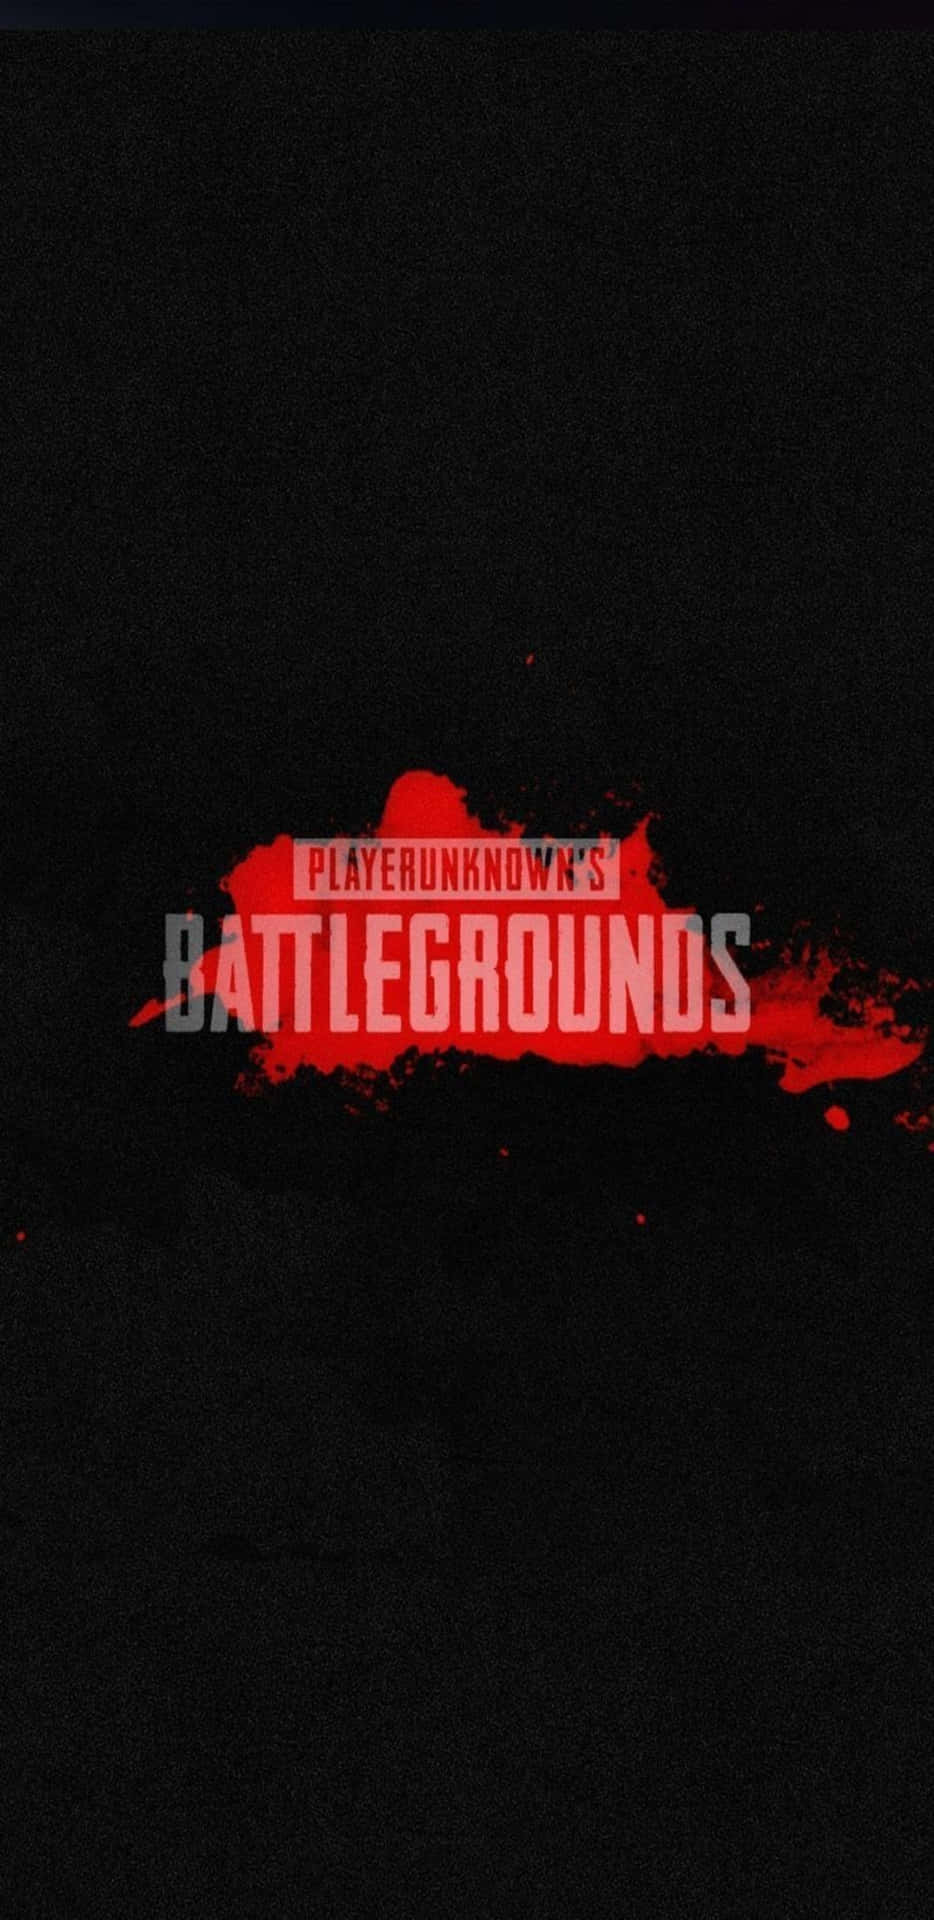 Pixel3xl Playerunknown's Battlegrounds Bakgrundstitel Med Rött Stänk.